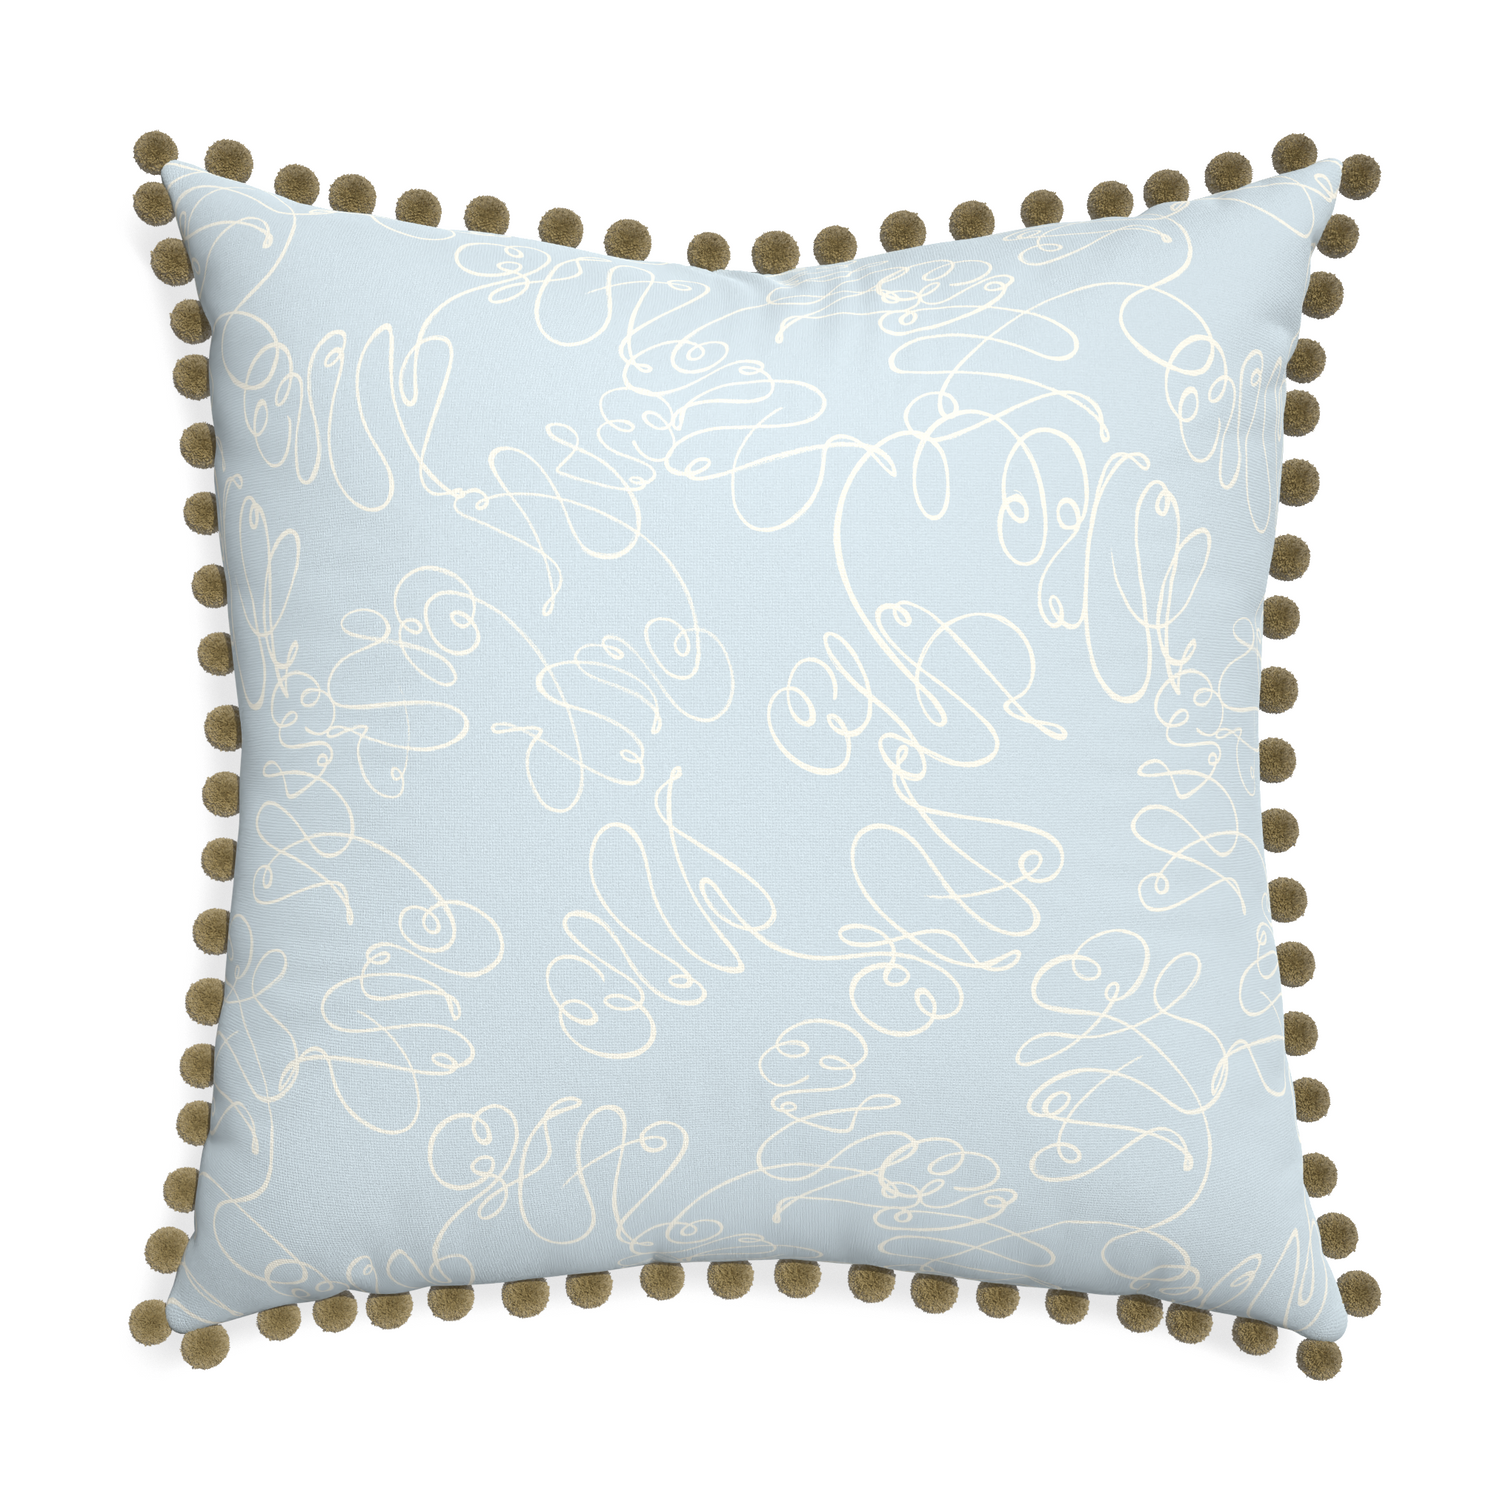 Euro-sham mirabella custom pillow with olive pom pom on white background